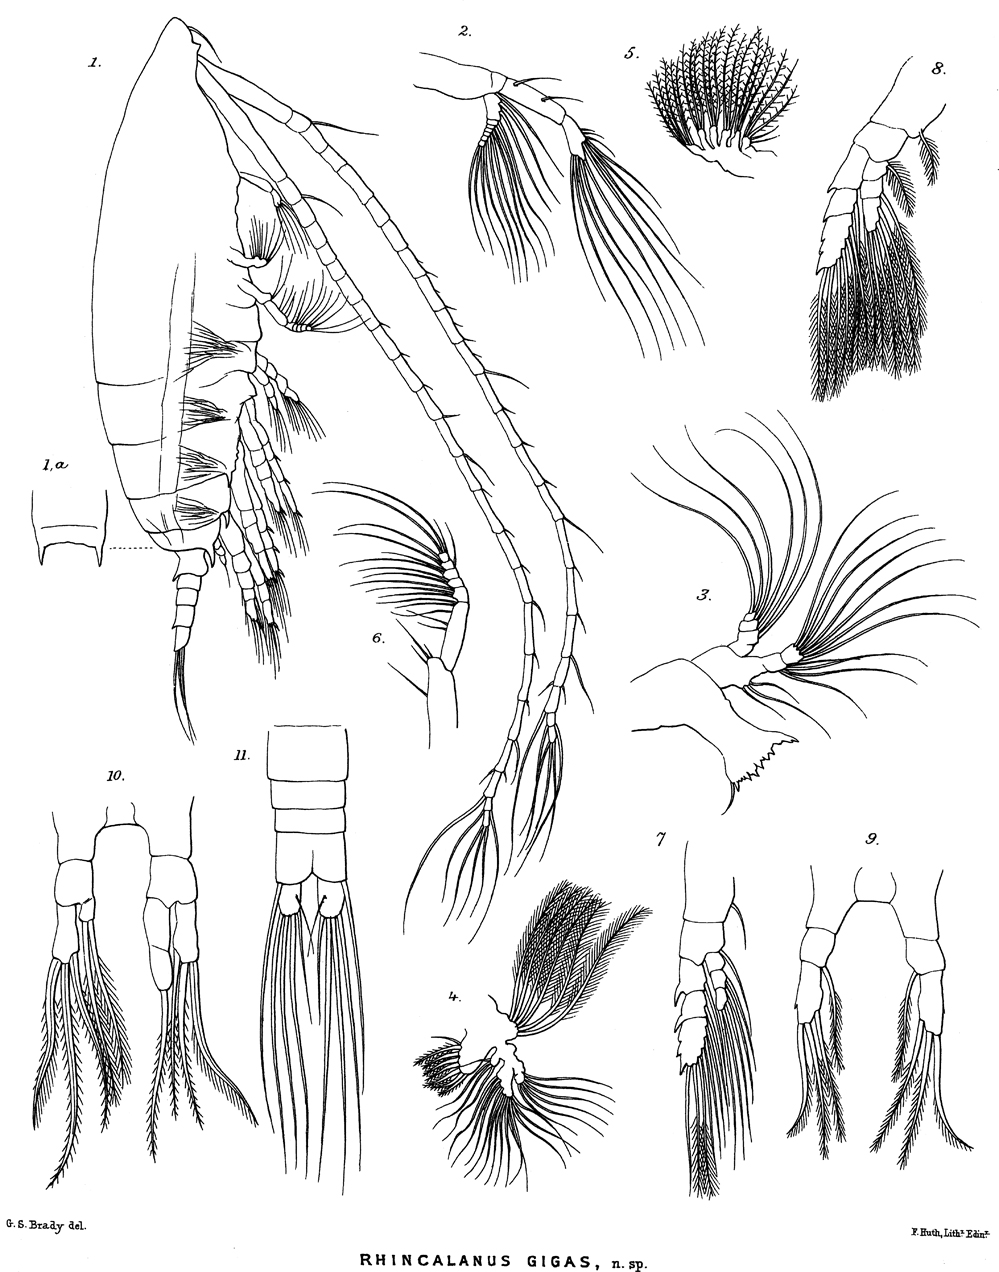 Species Rhincalanus gigas - Plate 8 of morphological figures